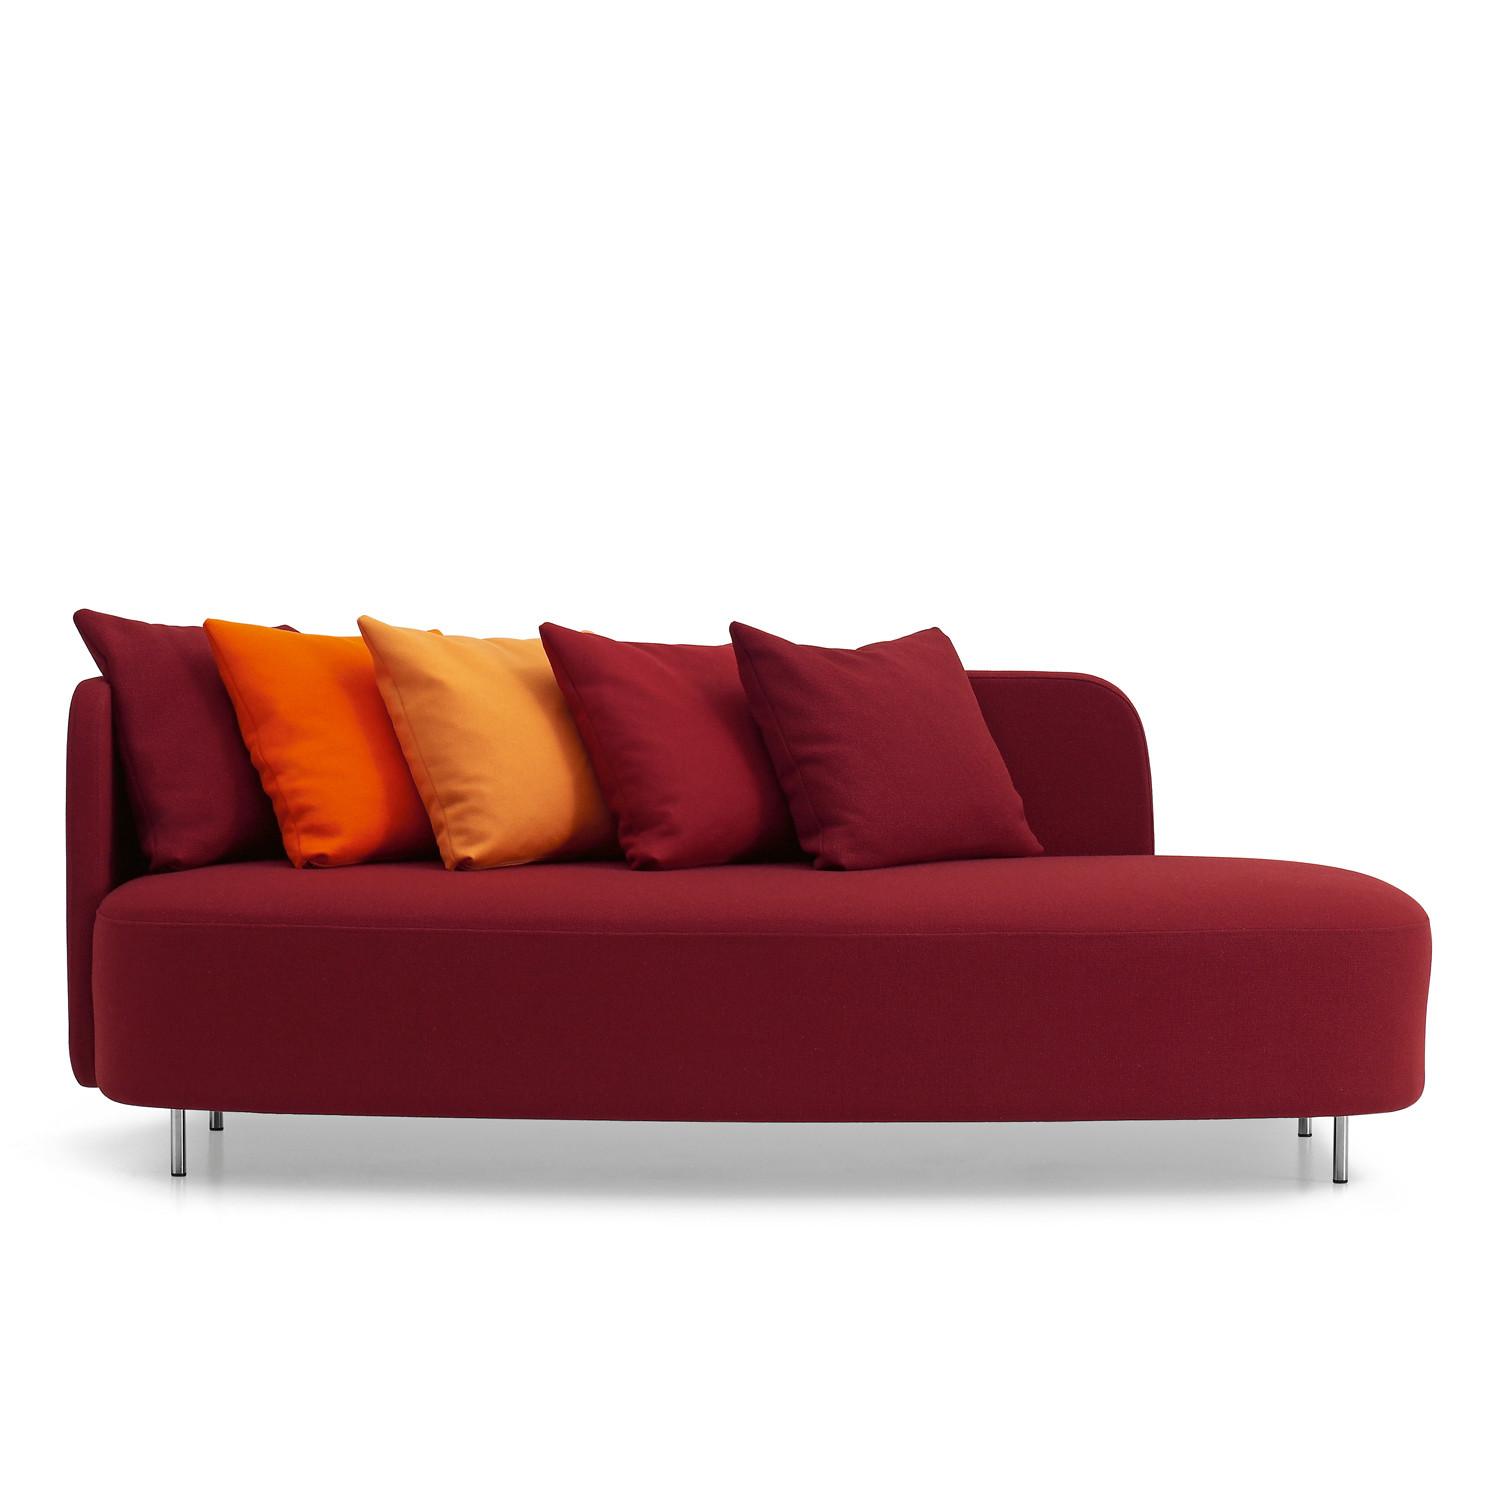 Minima Sofa by Offecct